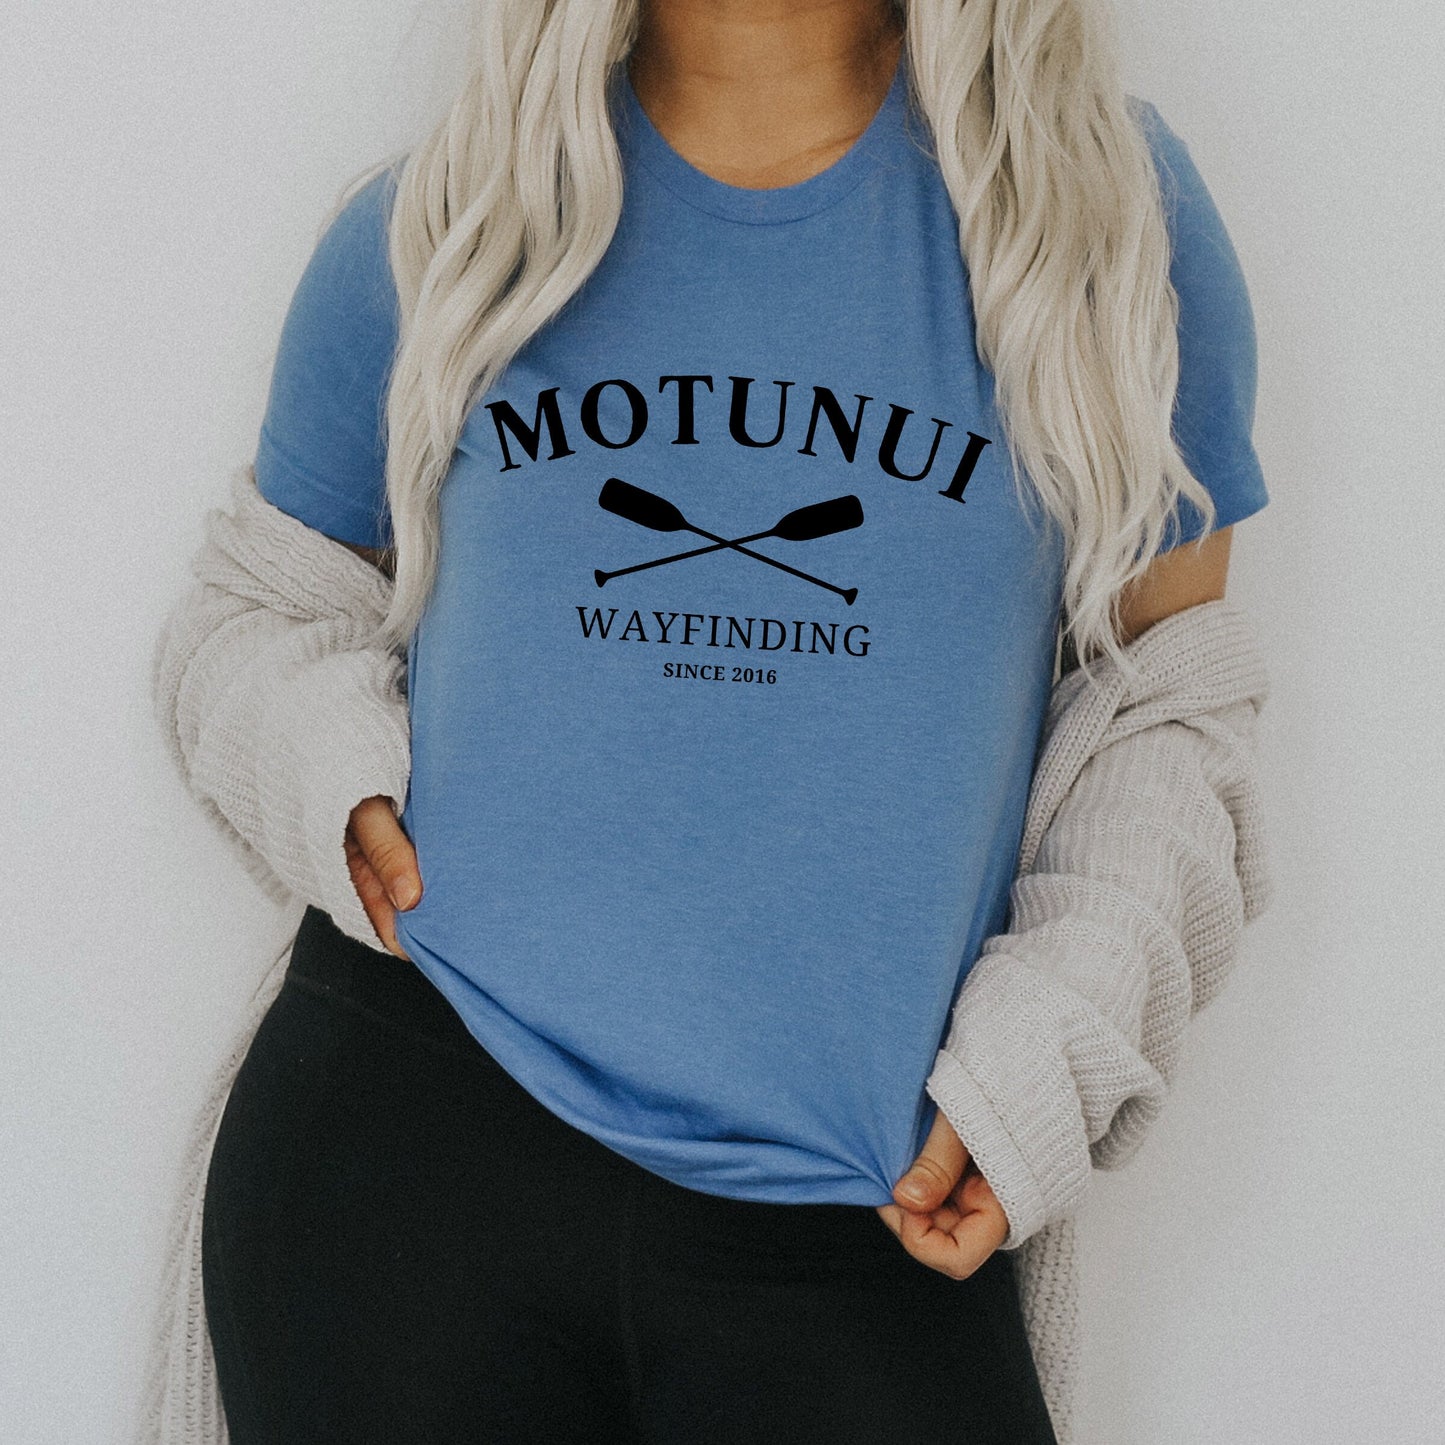 Motunui Wayfinding Moana Club Ultra Soft Graphic Tee Unisex Soft Tee T-shirt for Women or Men